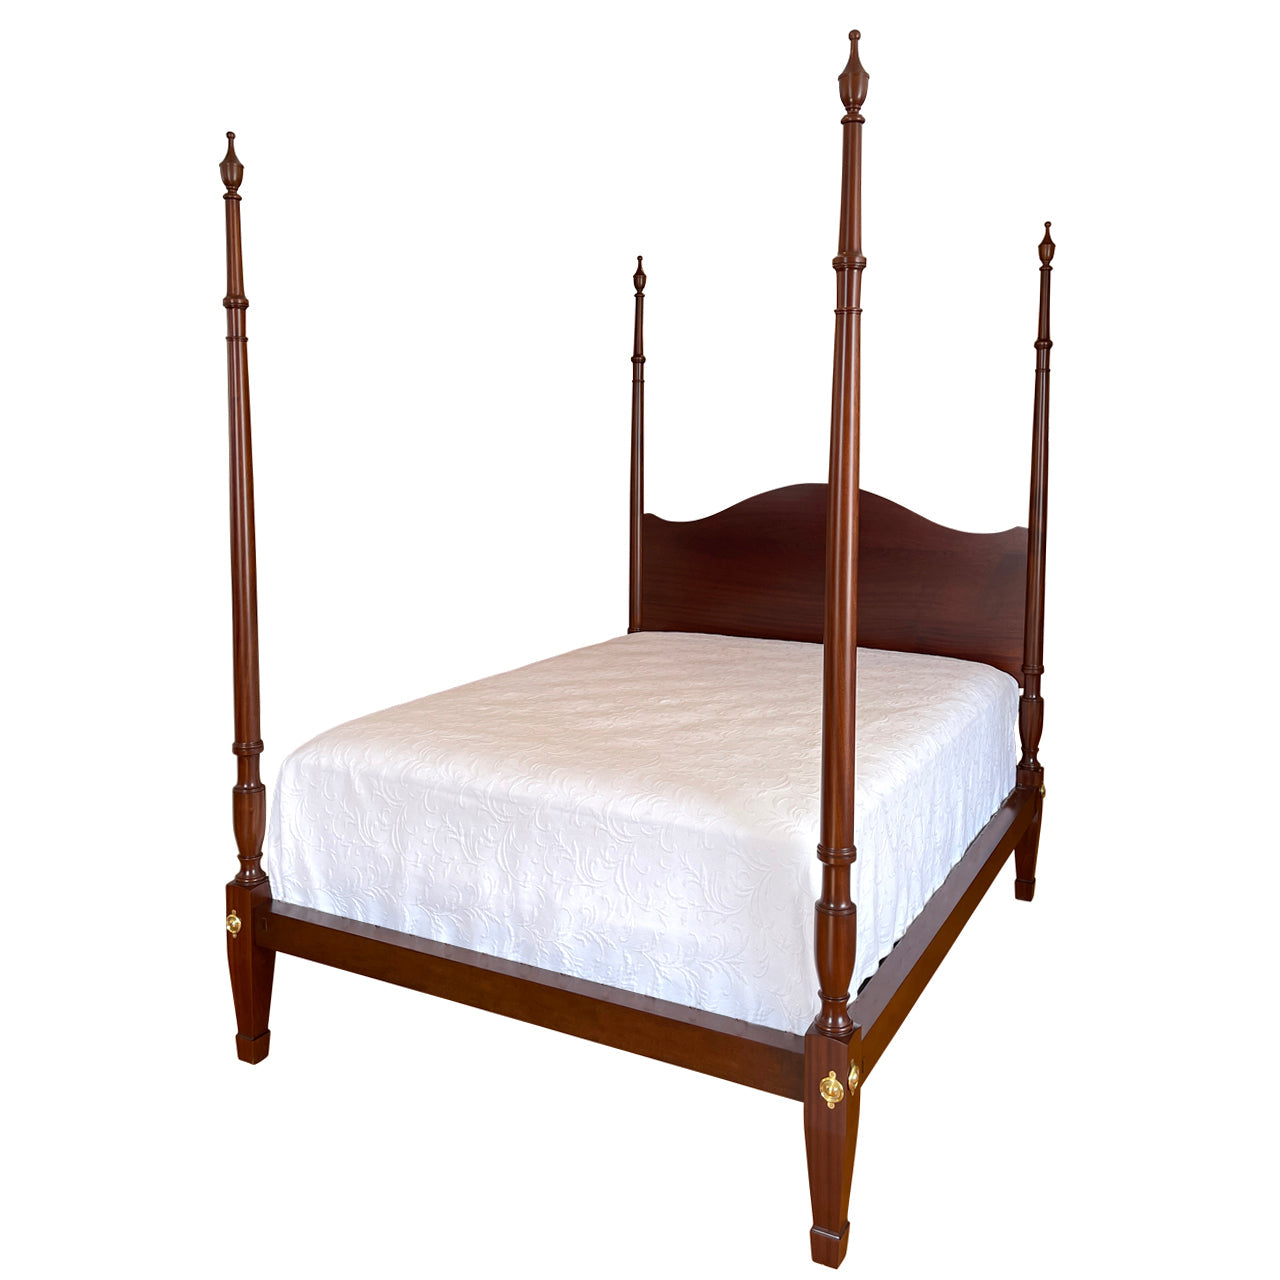 George Washington's Bed